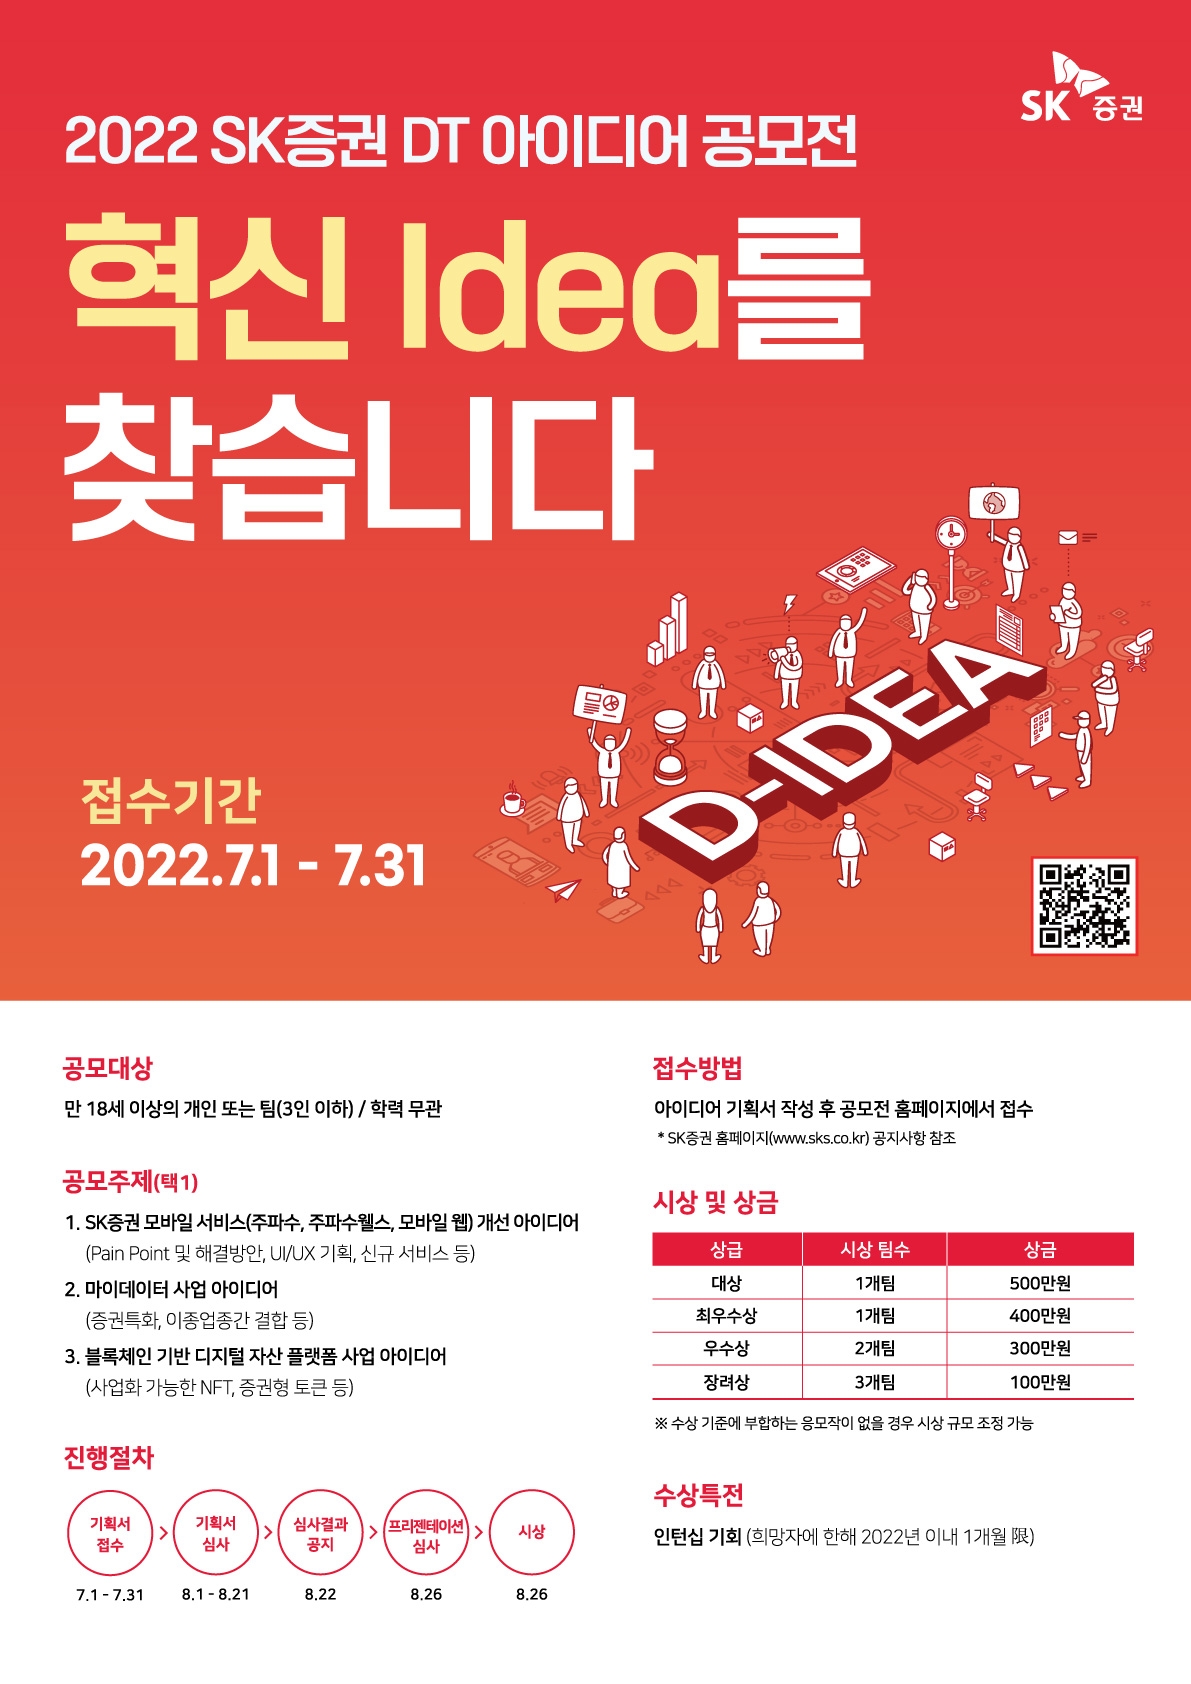 SK증권 ‘2022 SK증권 DT아이디어 공모전’ 개최